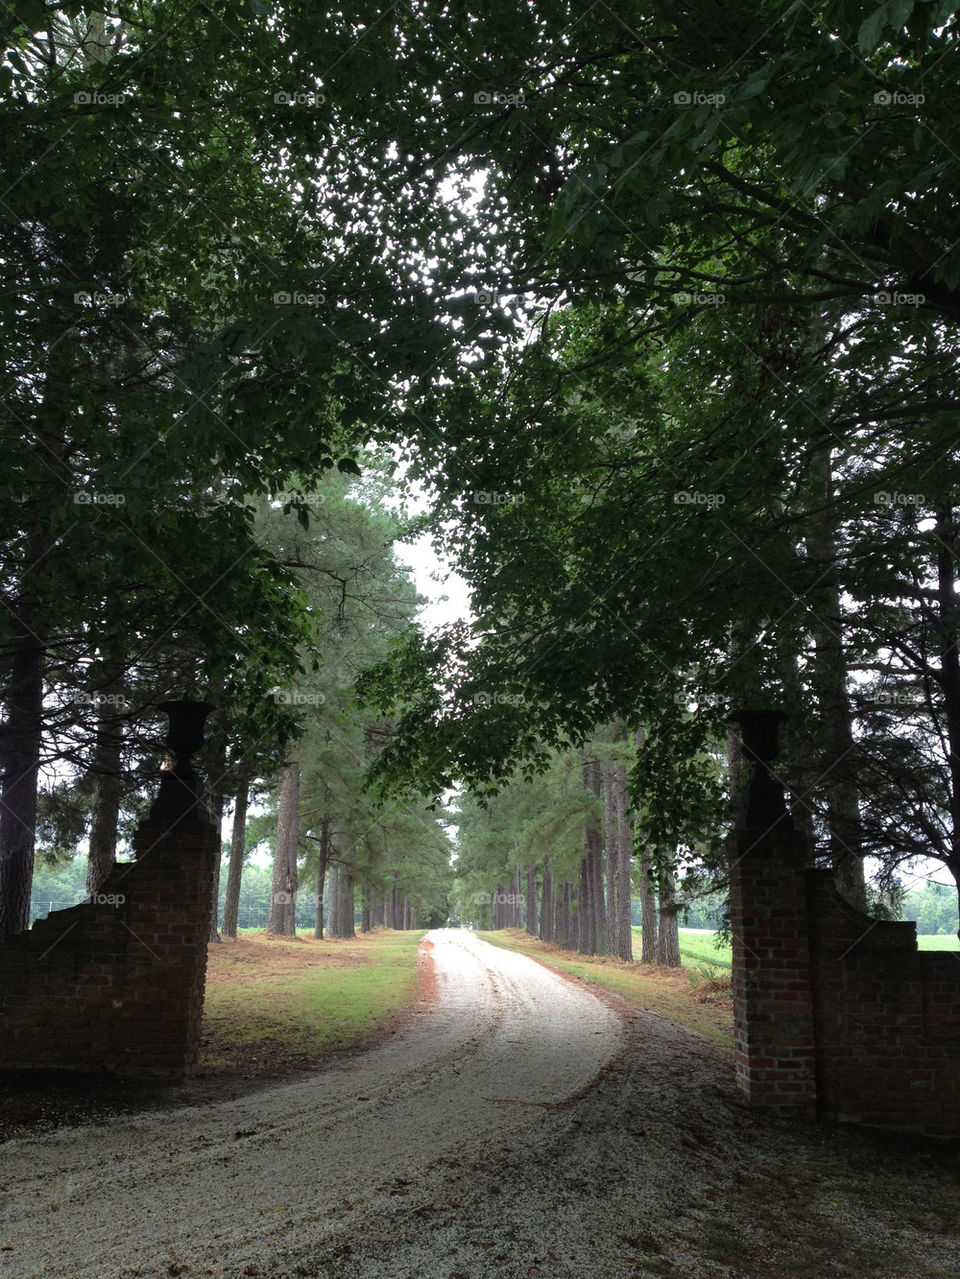 trees road brick country by hskrzfan34